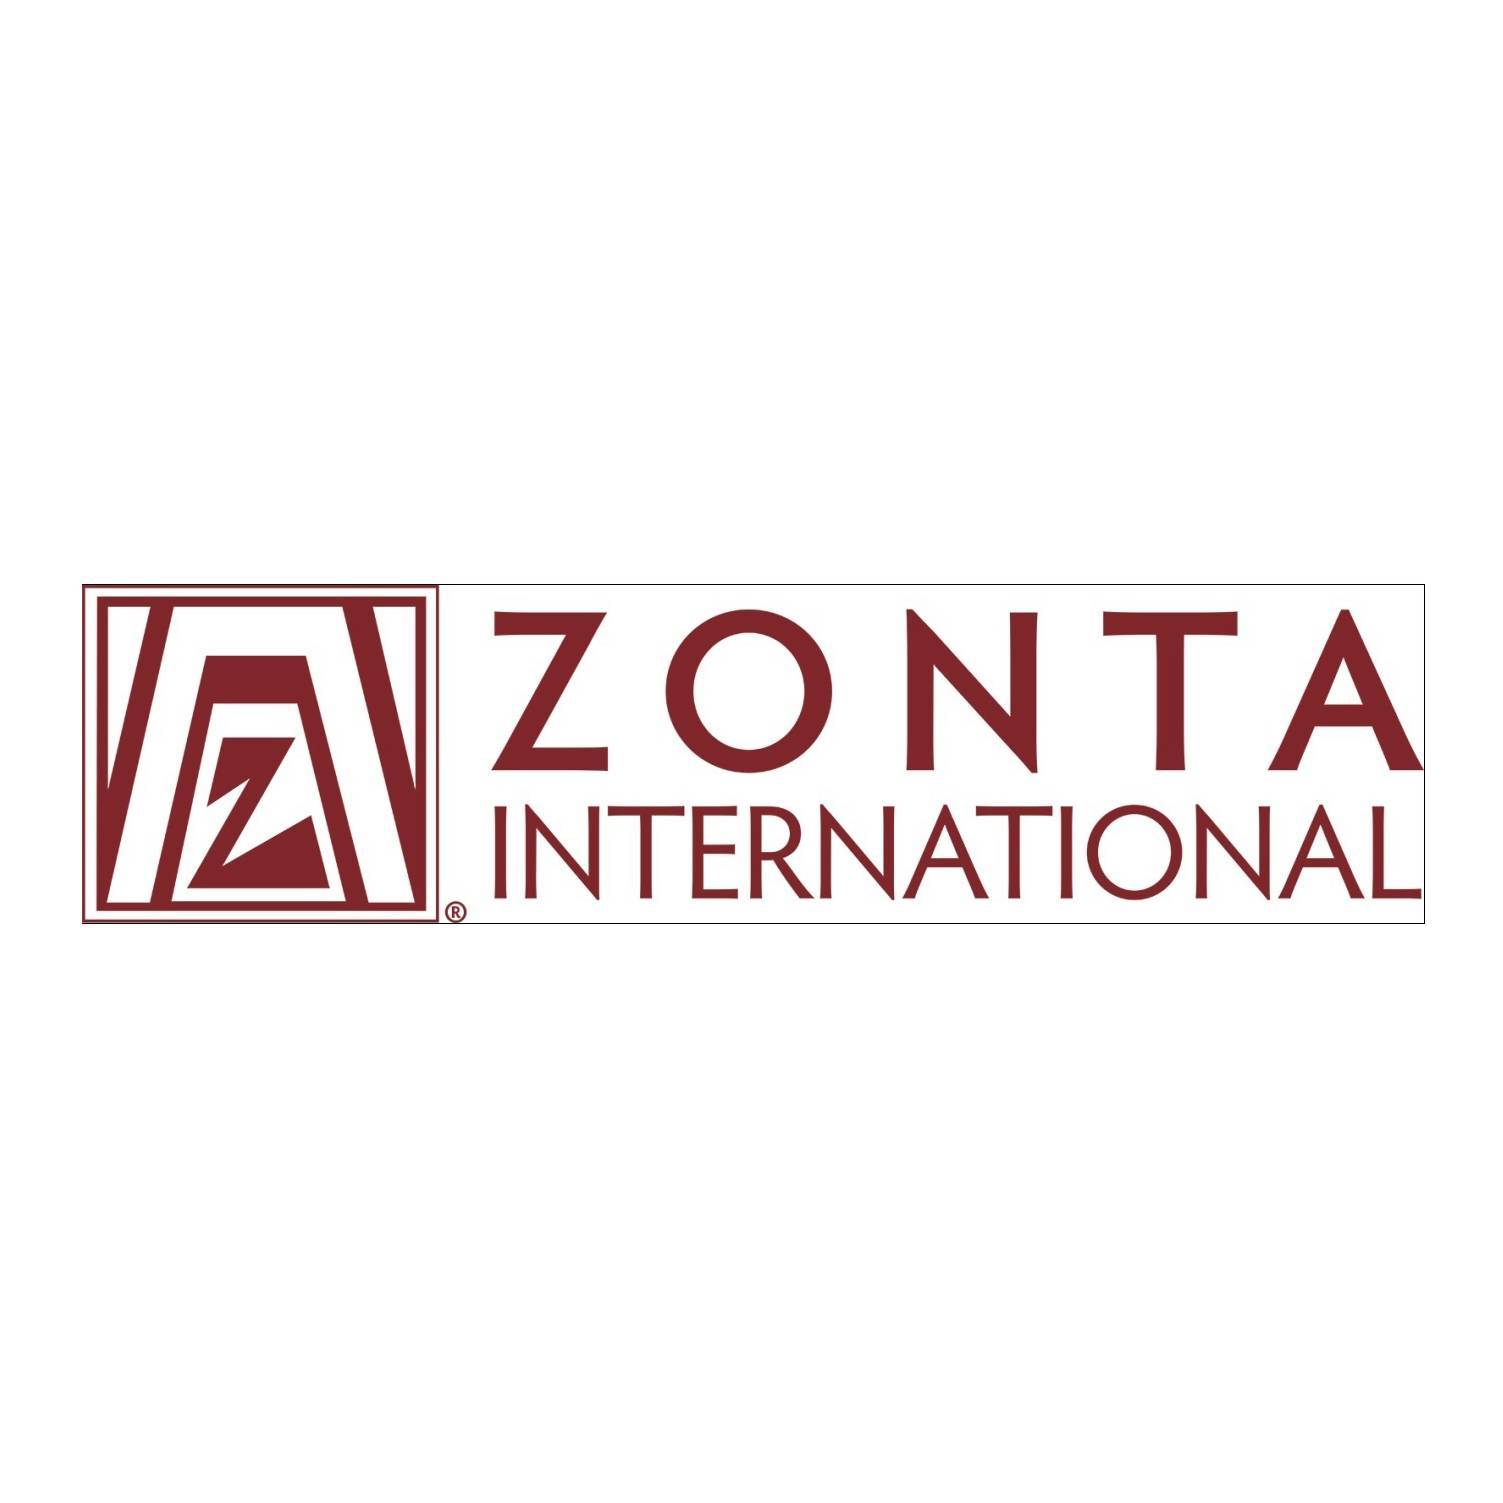 Zonta International